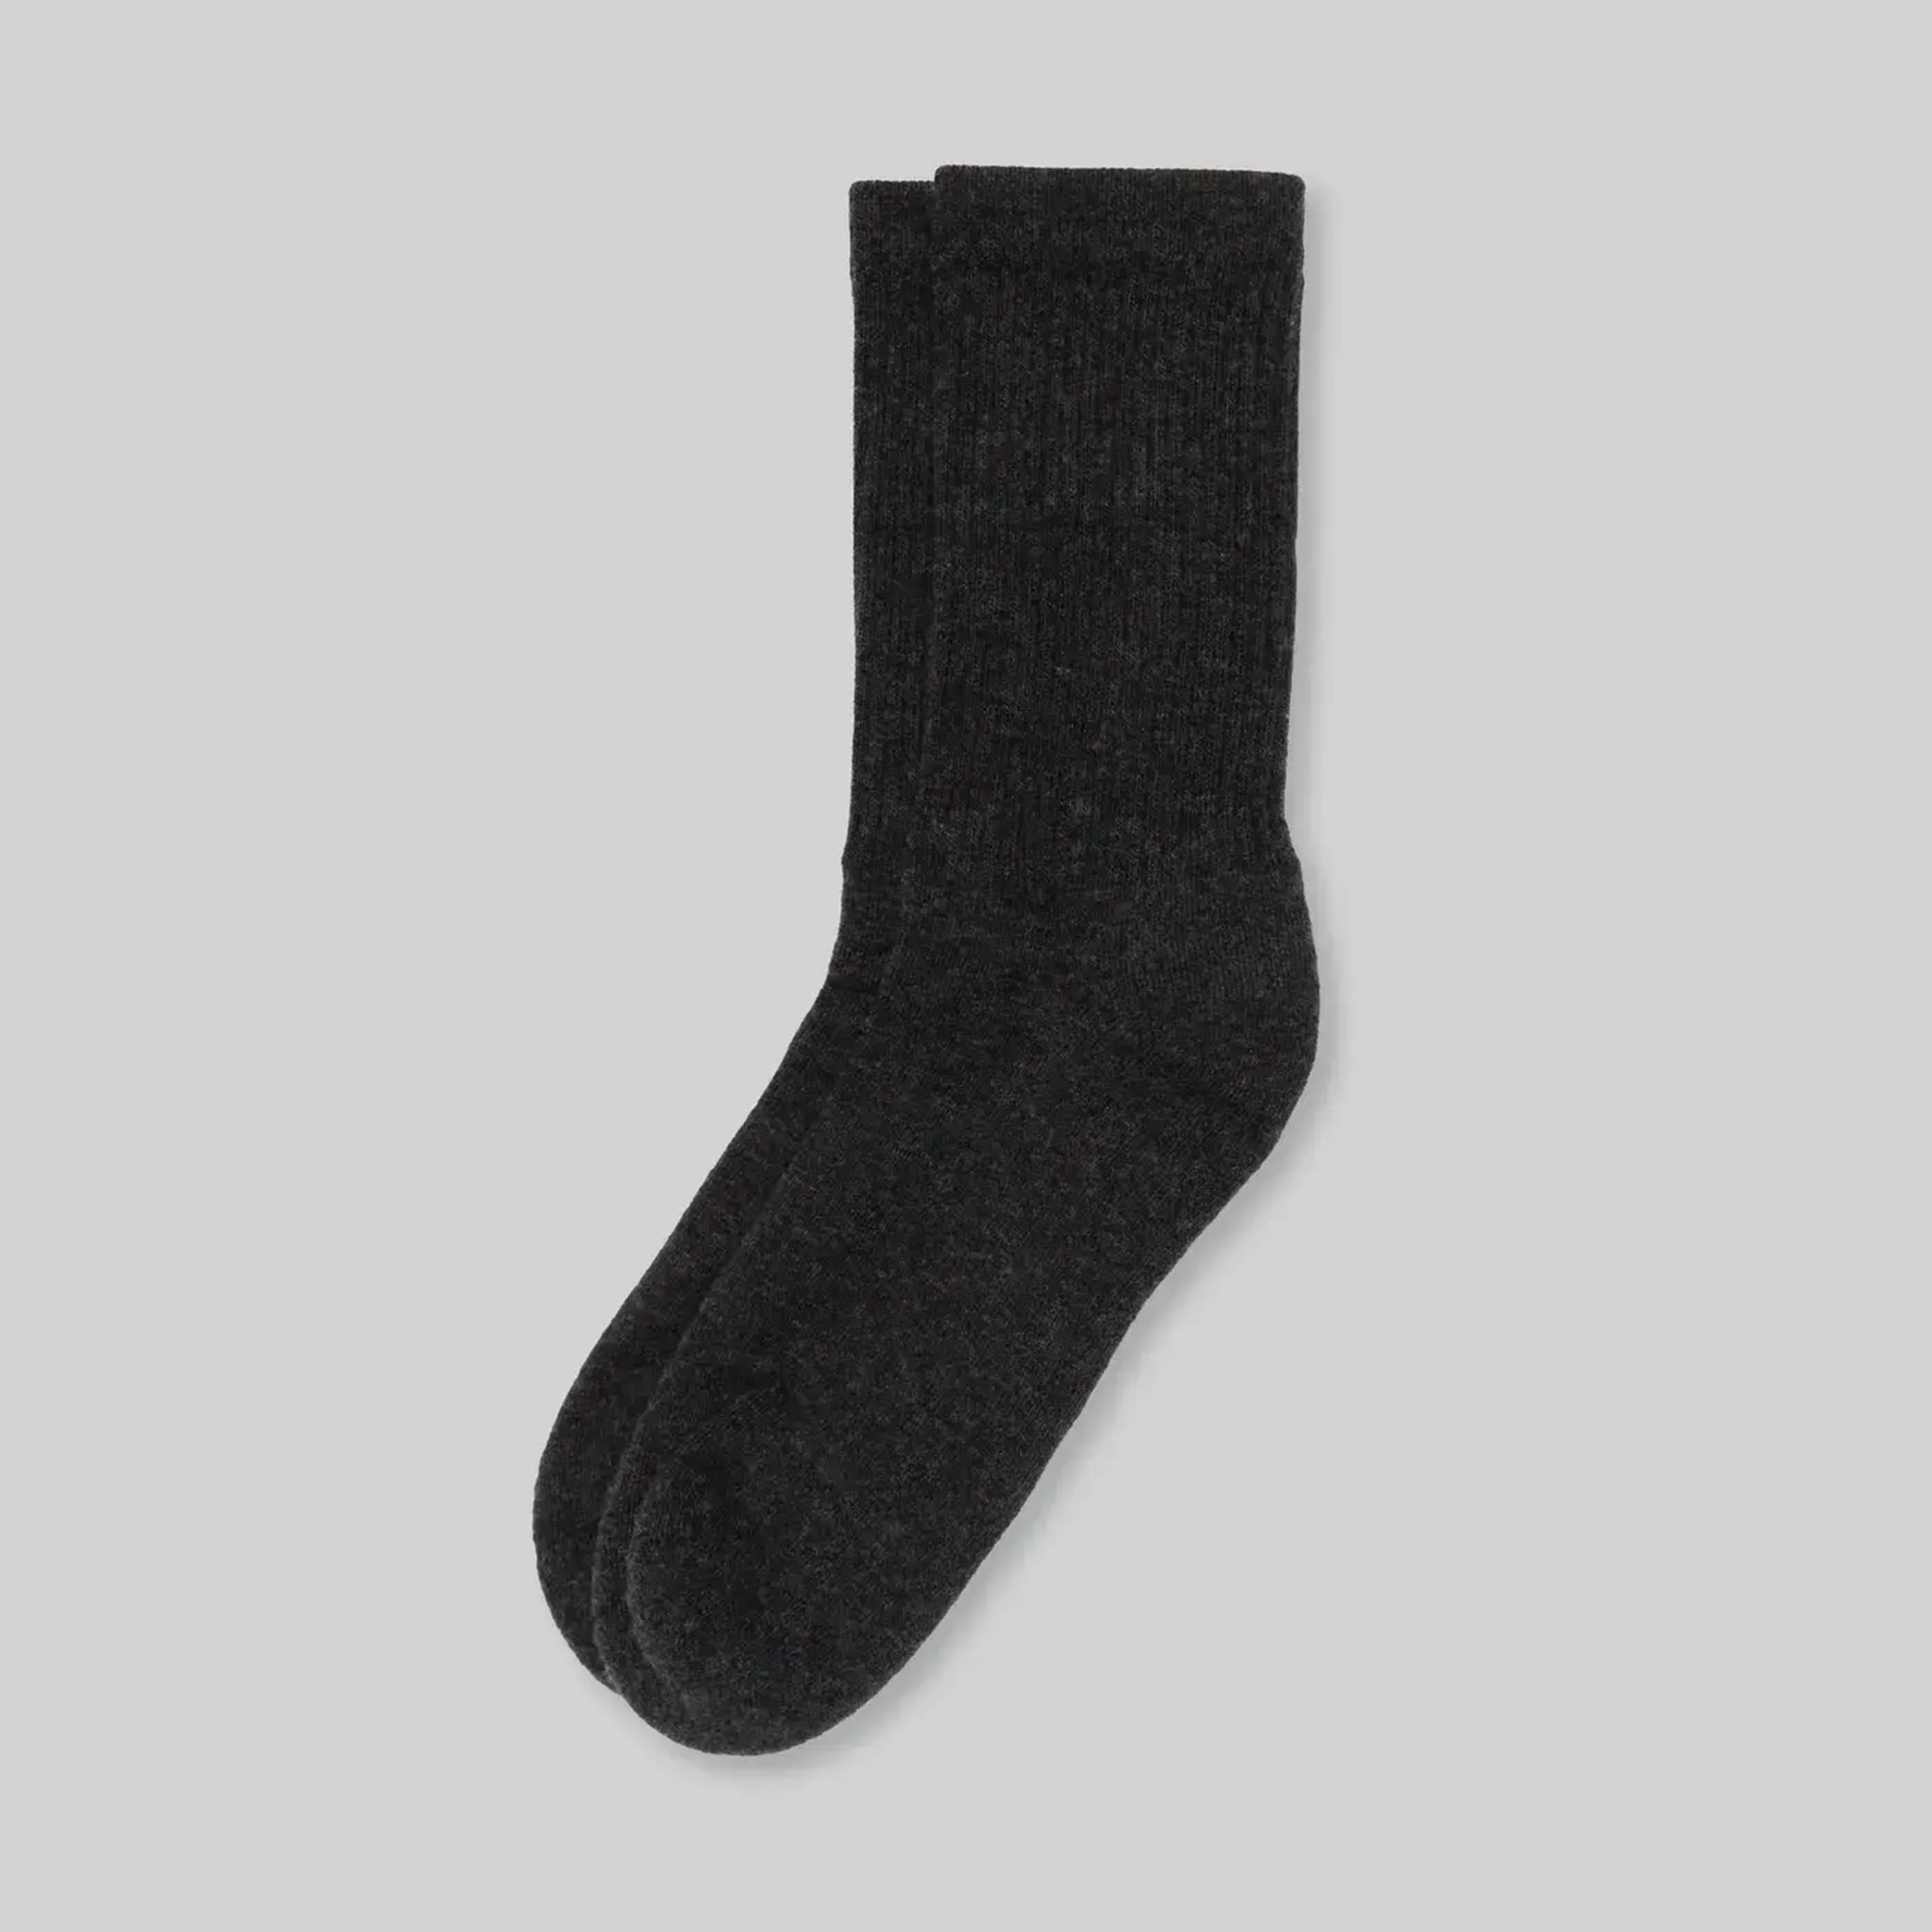 Superfine Merino Wool Socks - Charcoal